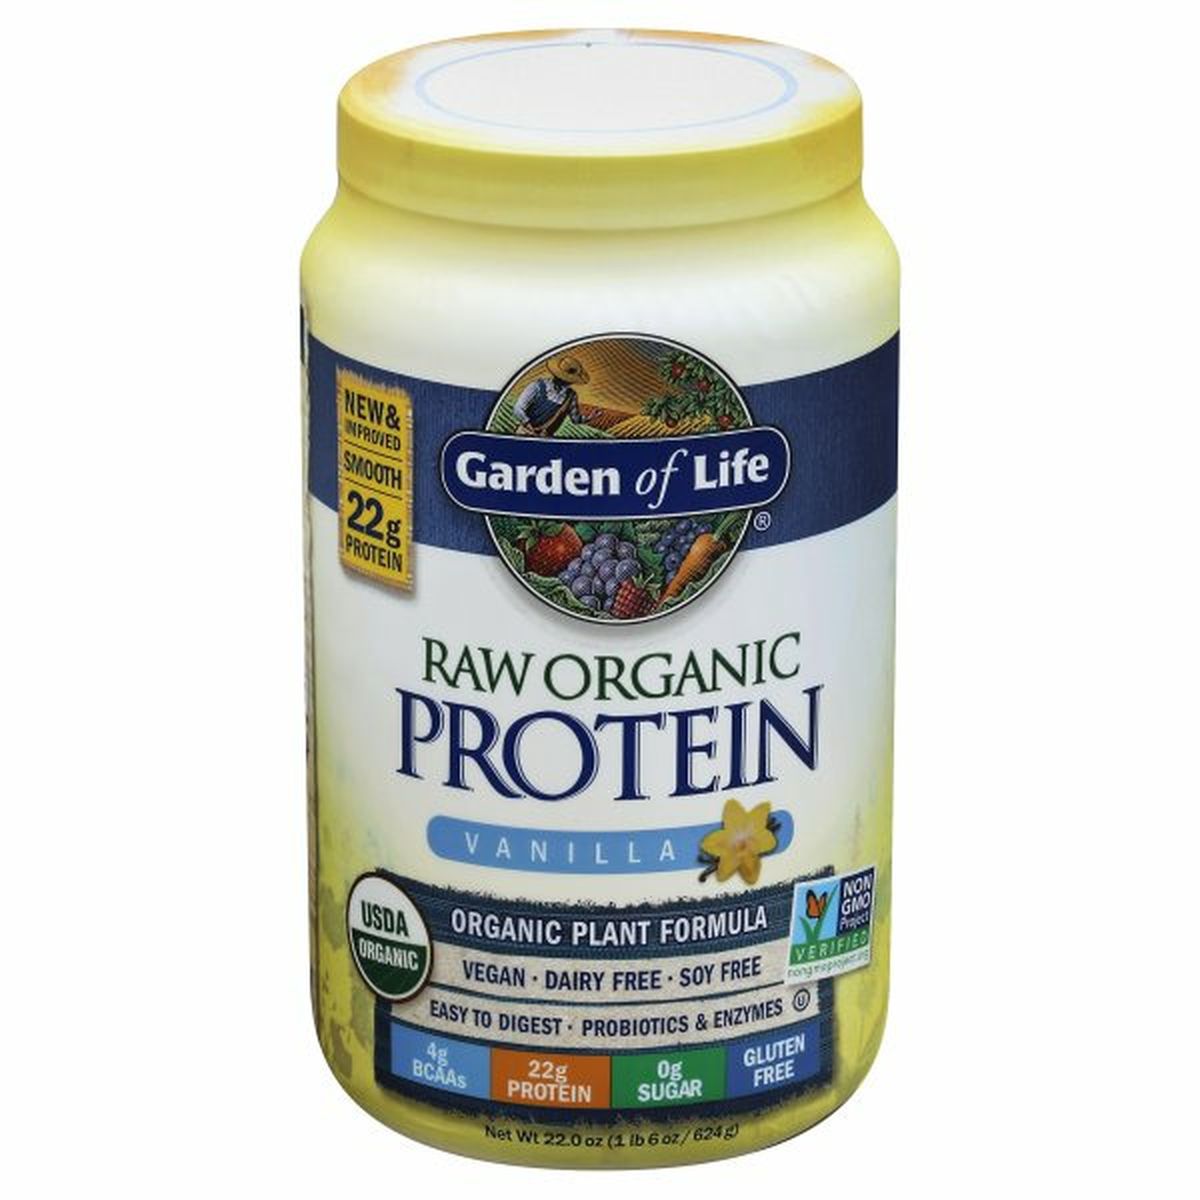 Calories in Garden of Life Raw Organic Protein, Organic Plant Formula, Vanilla